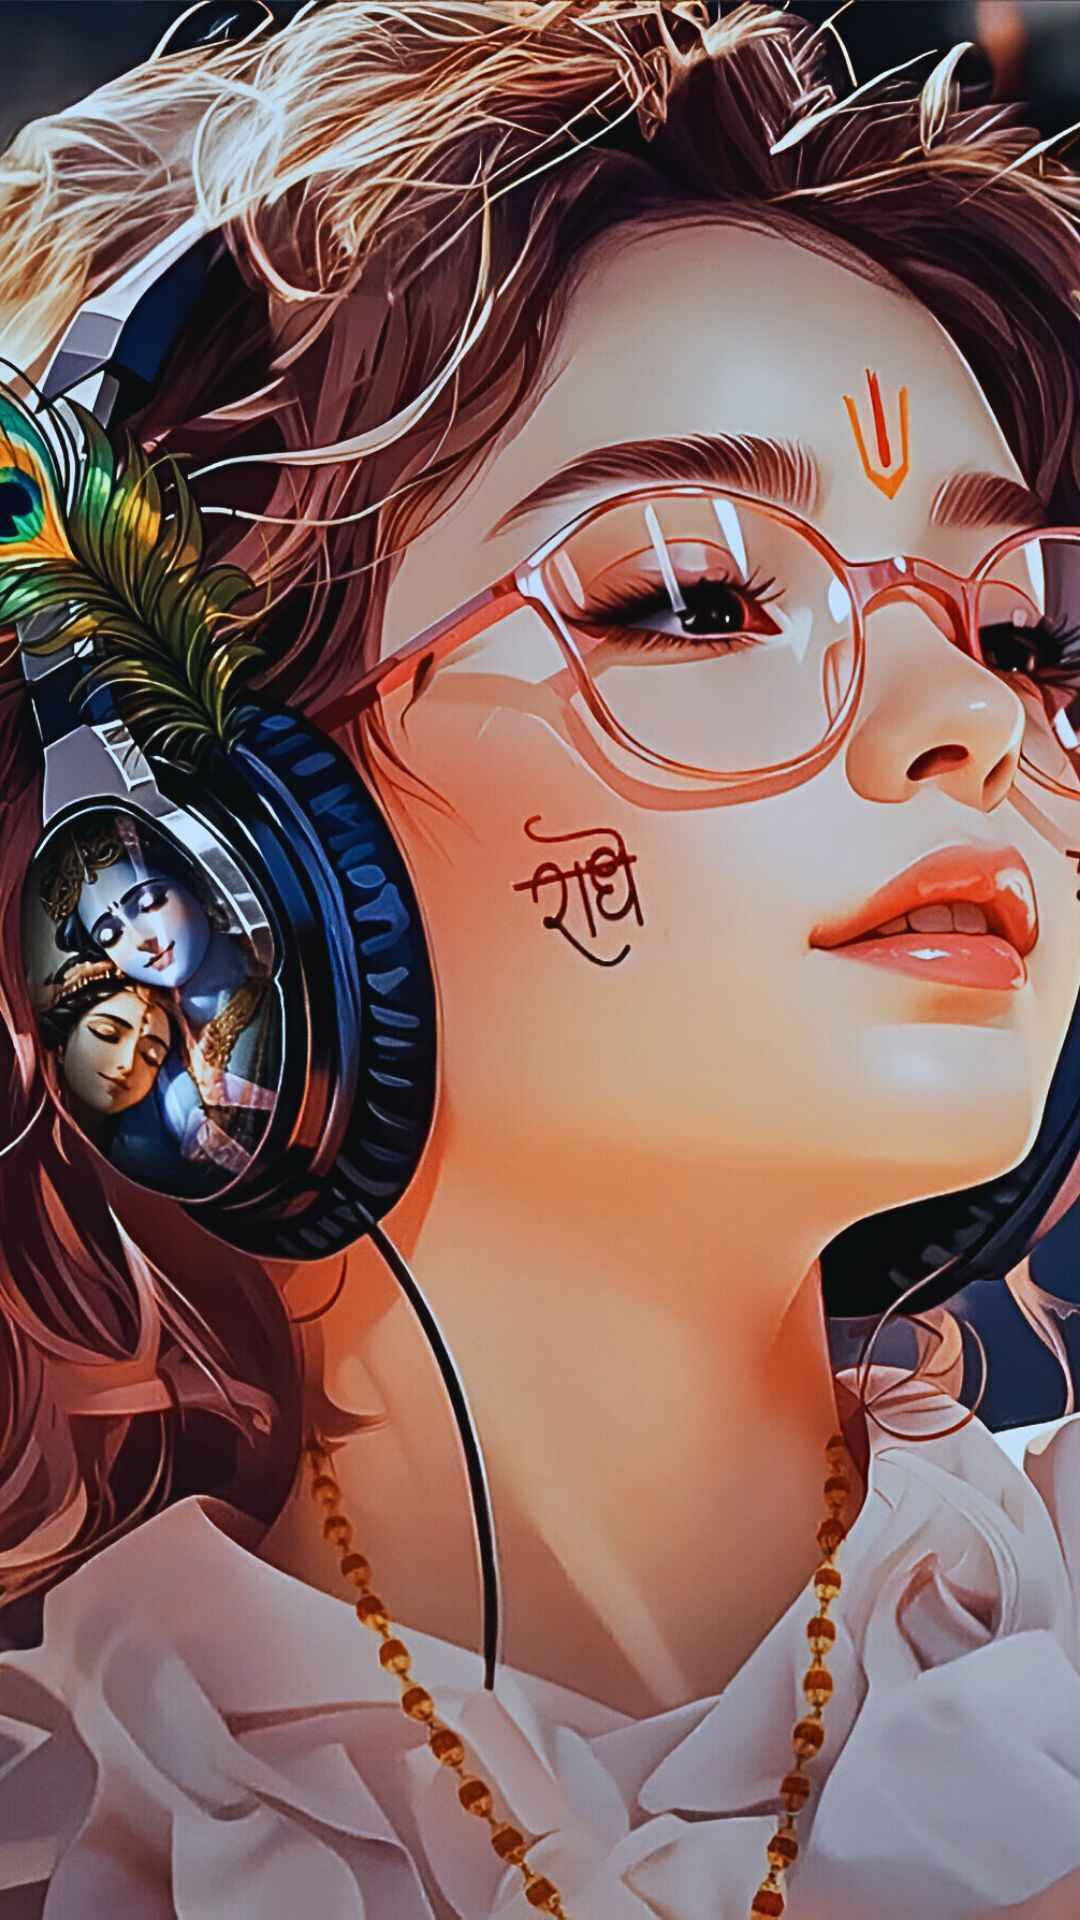 Cute Anime Girl With Headphones Wallpaper HD